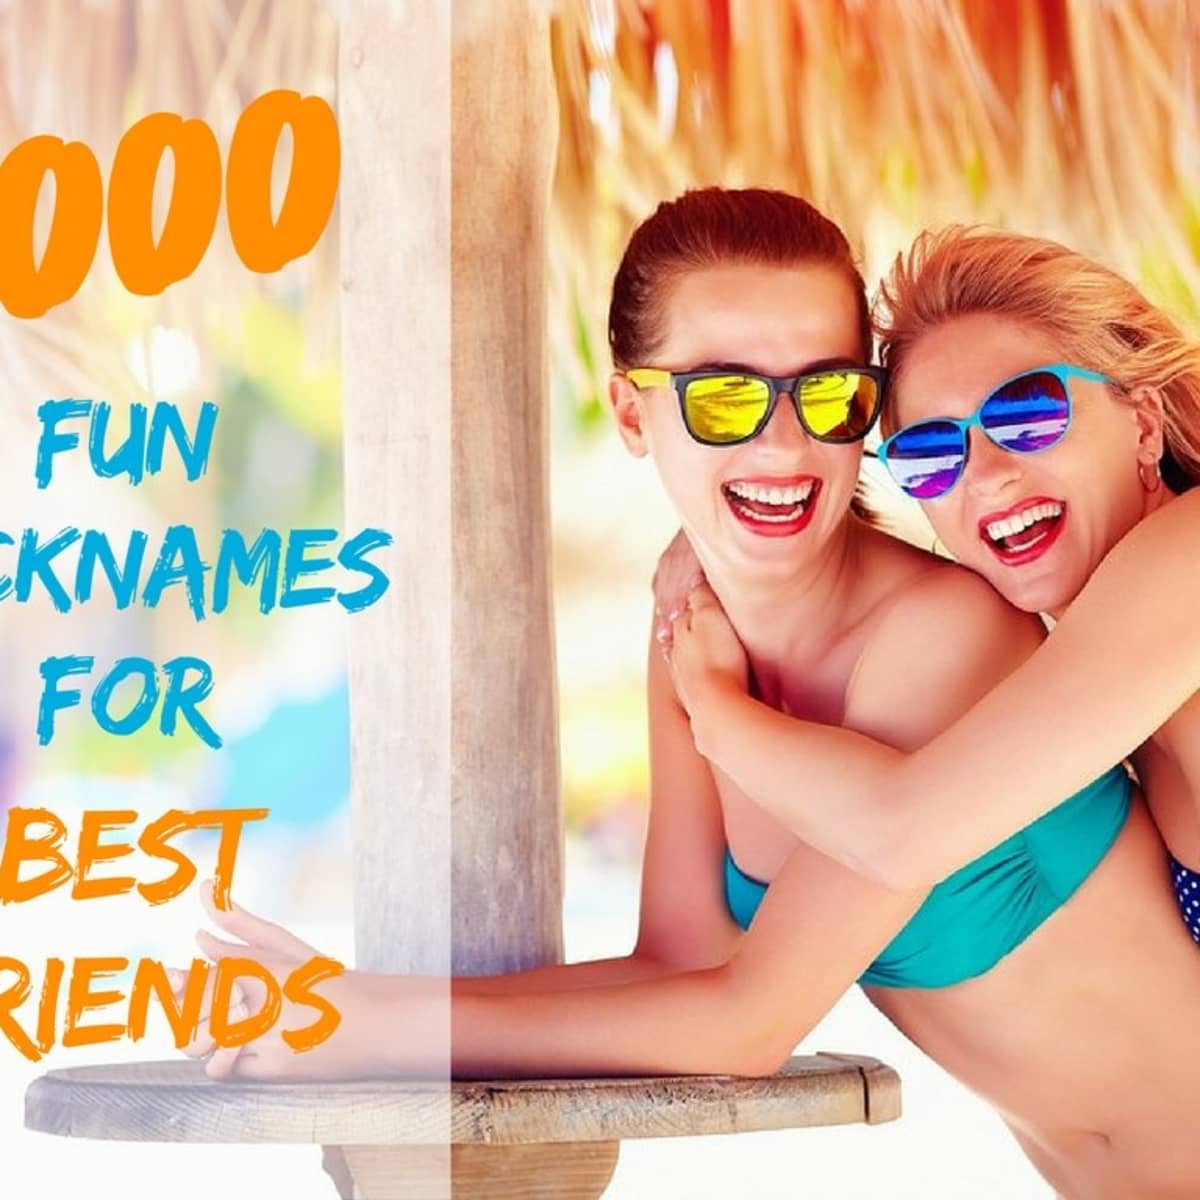 1000 Fun Nicknames for Best Friends - PairedLife